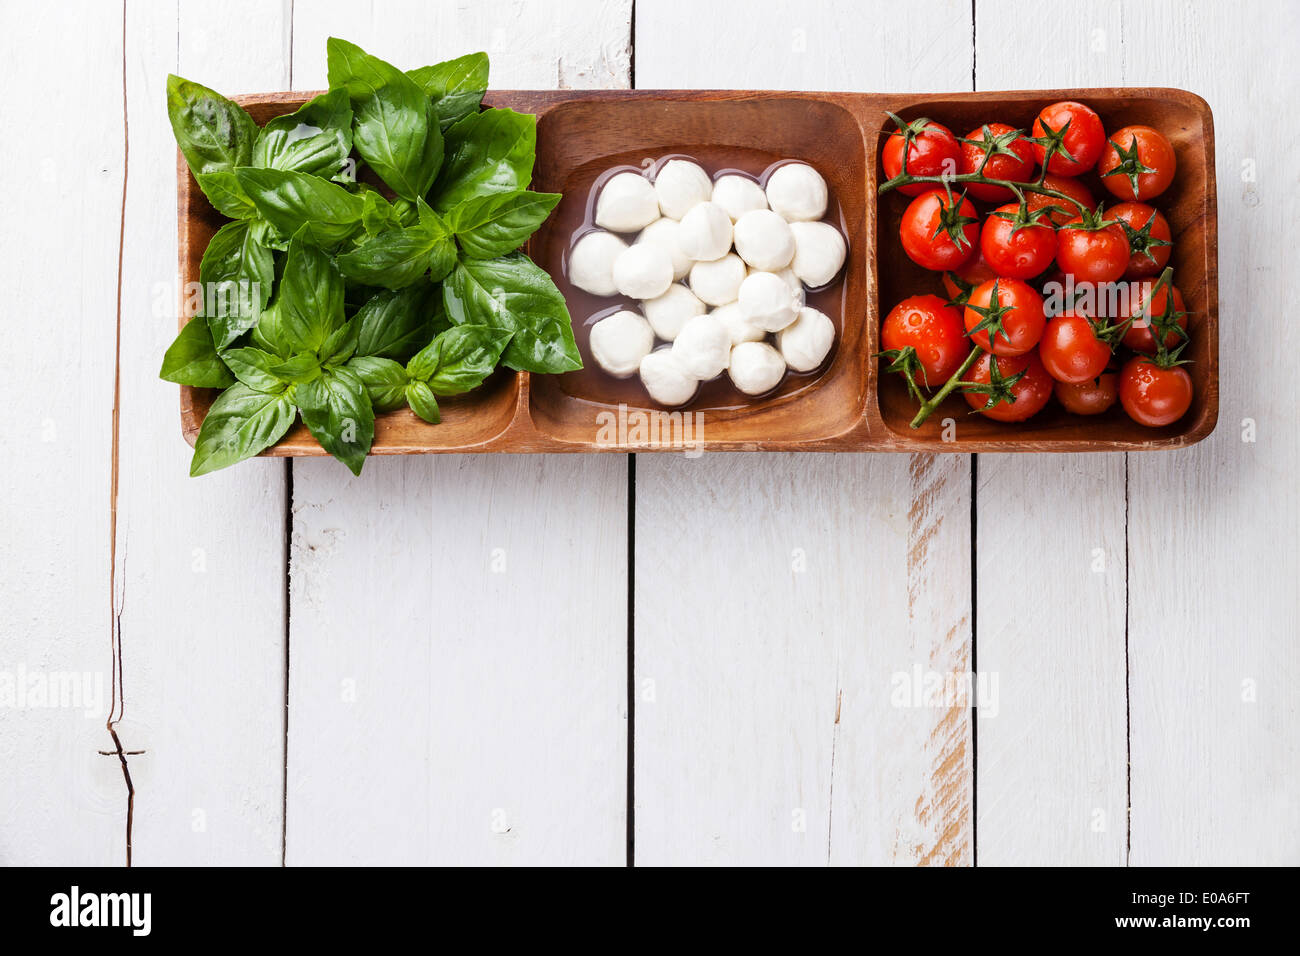 Green basil, white mozzarella, red tomatoes - Italian flag colors Stock Photo